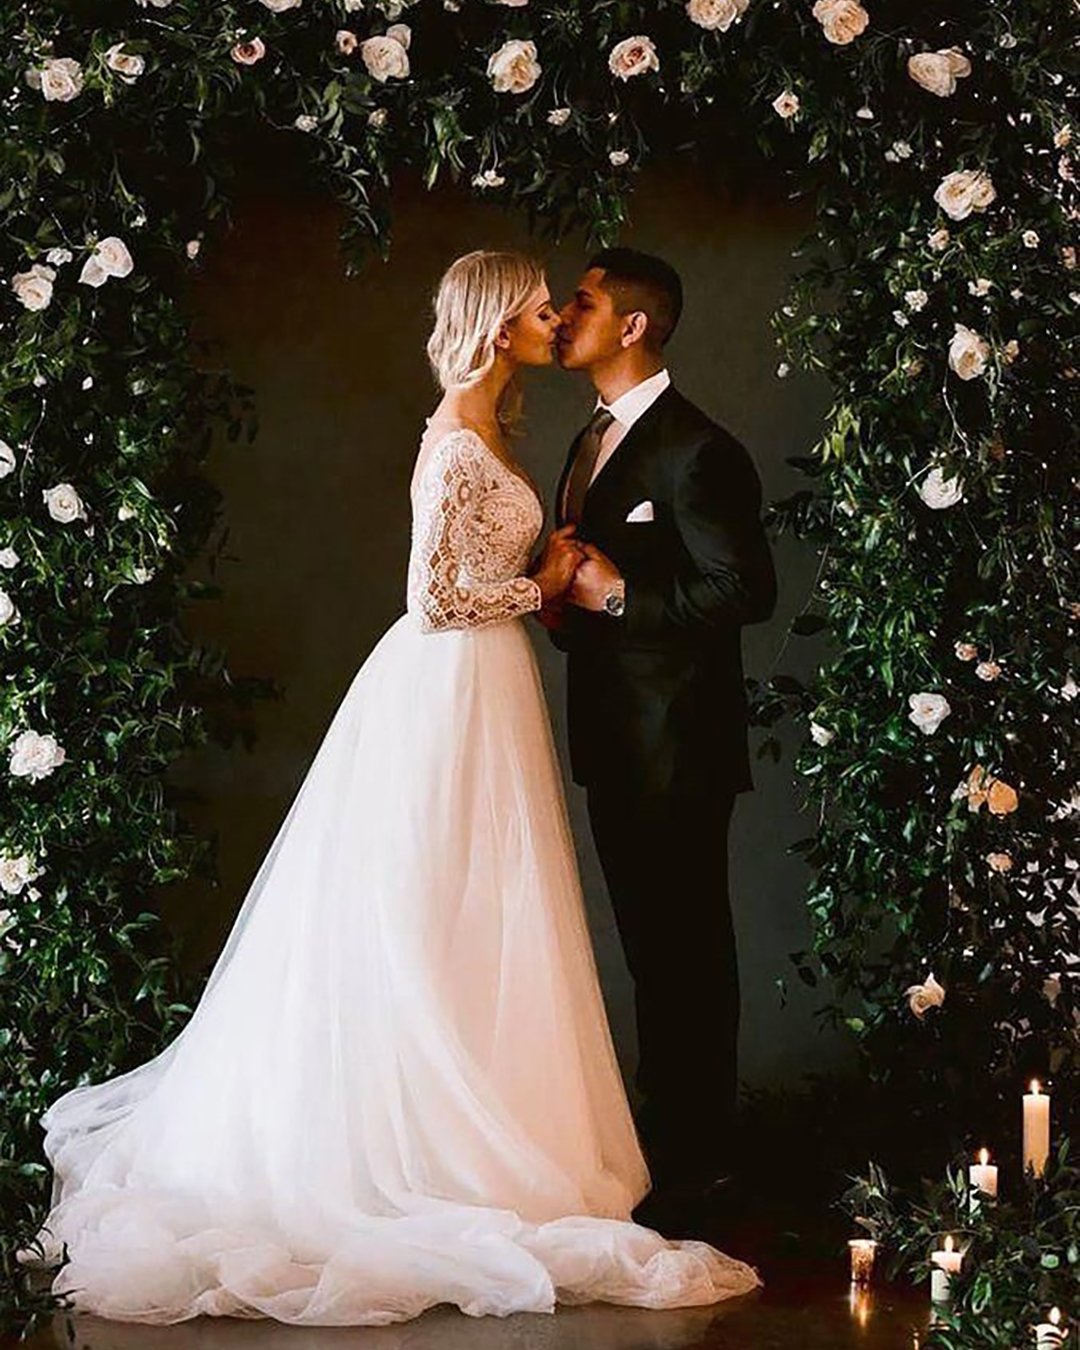 wedding photos wedding kiss in flowers radionphotography